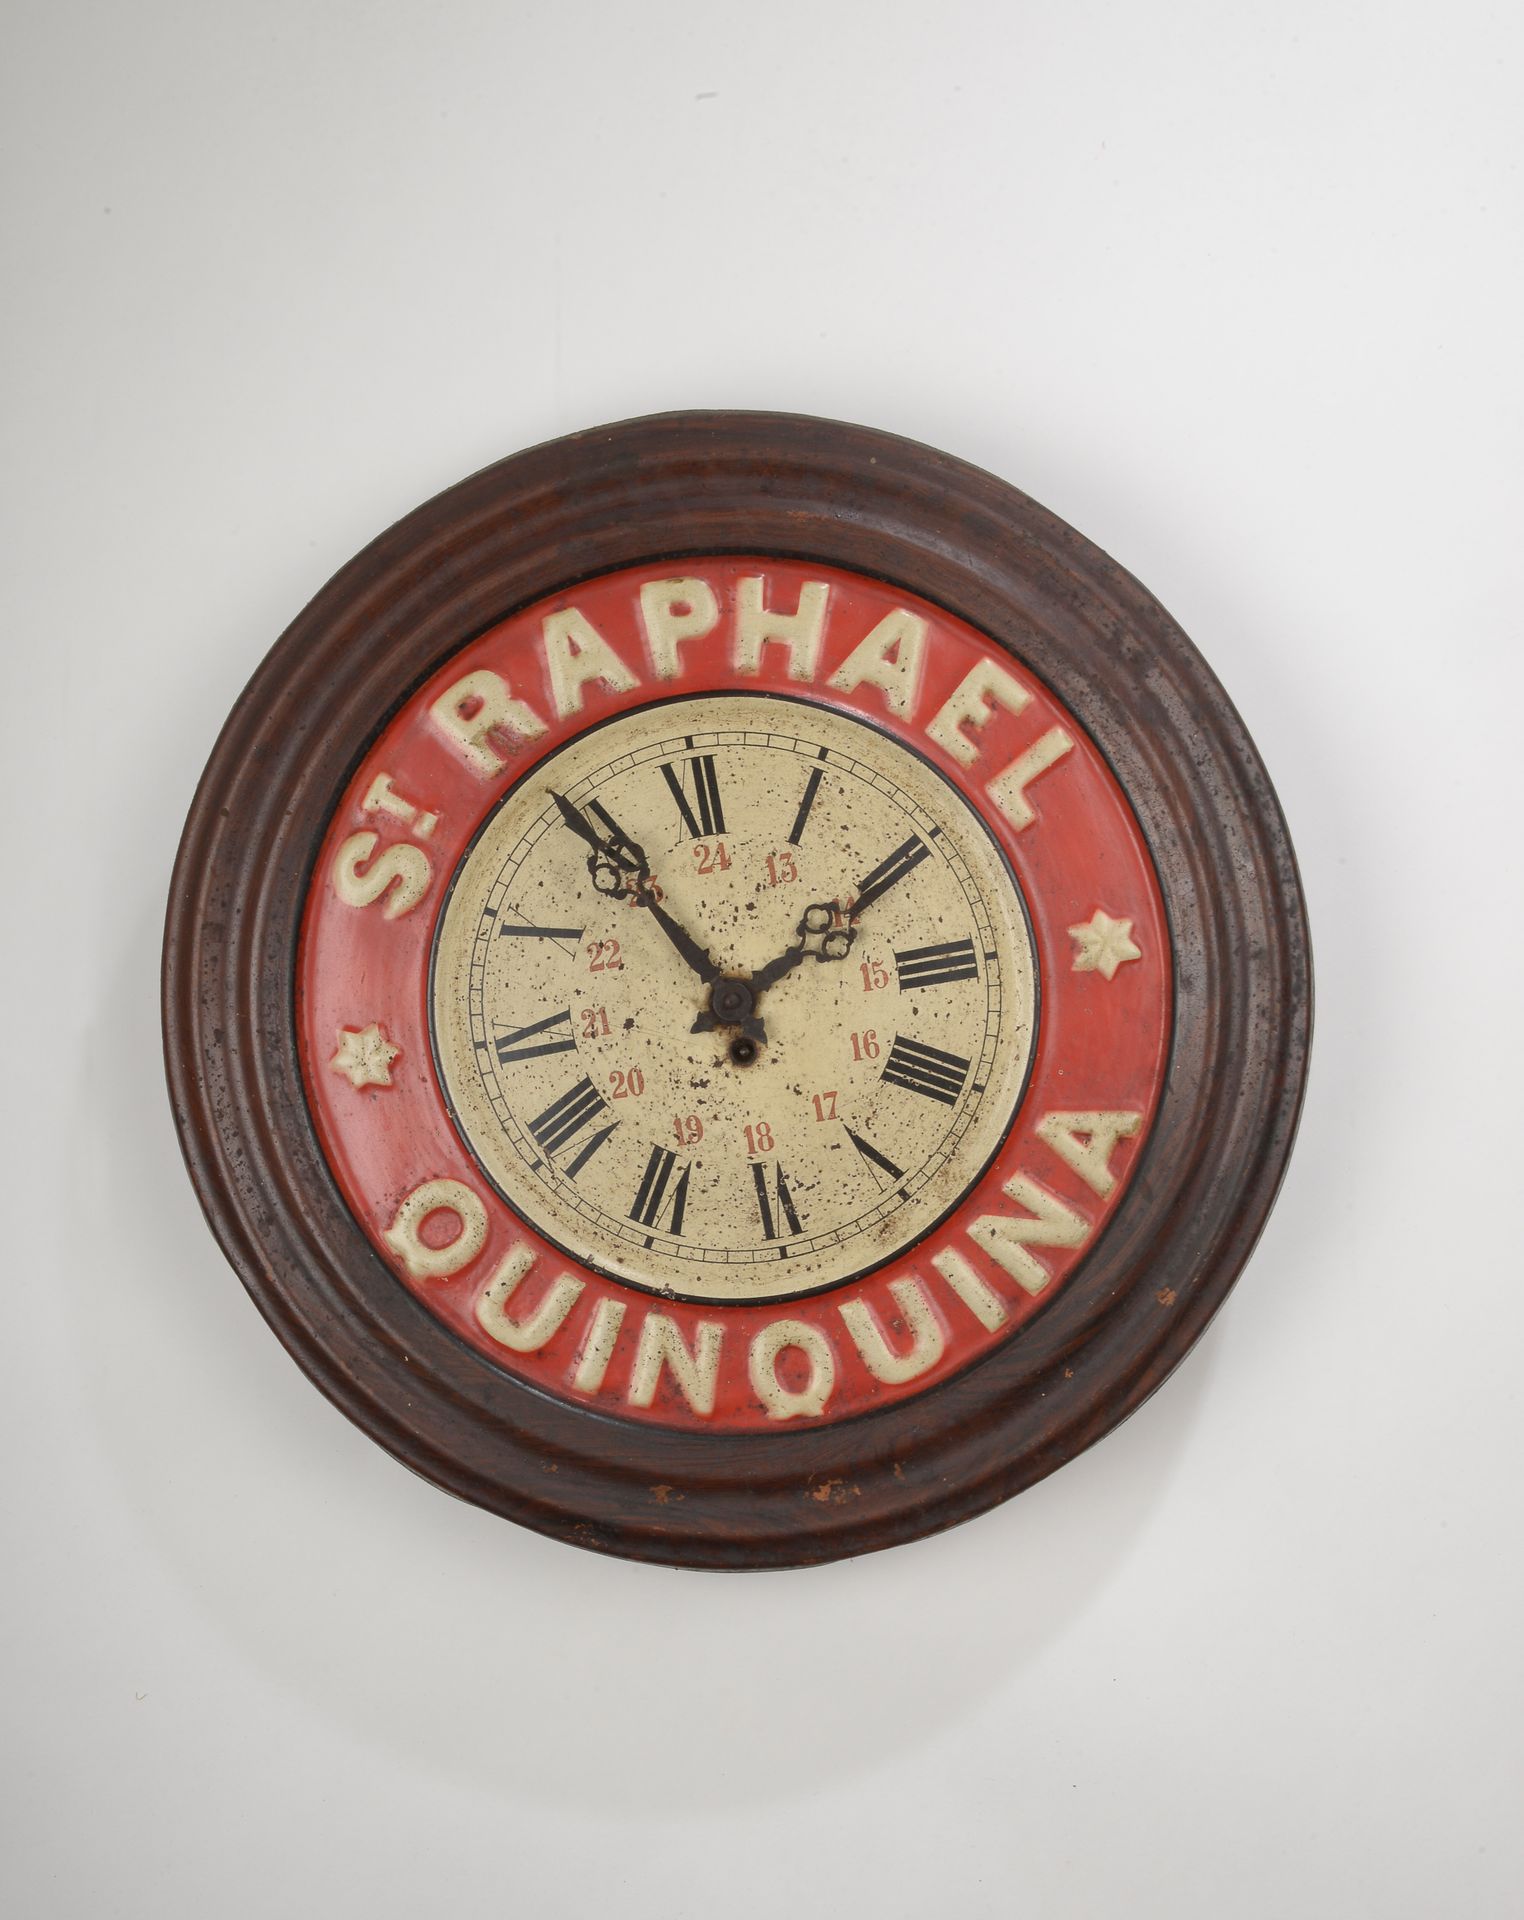 Null St Raphael Quiquina clock

enamelled plate